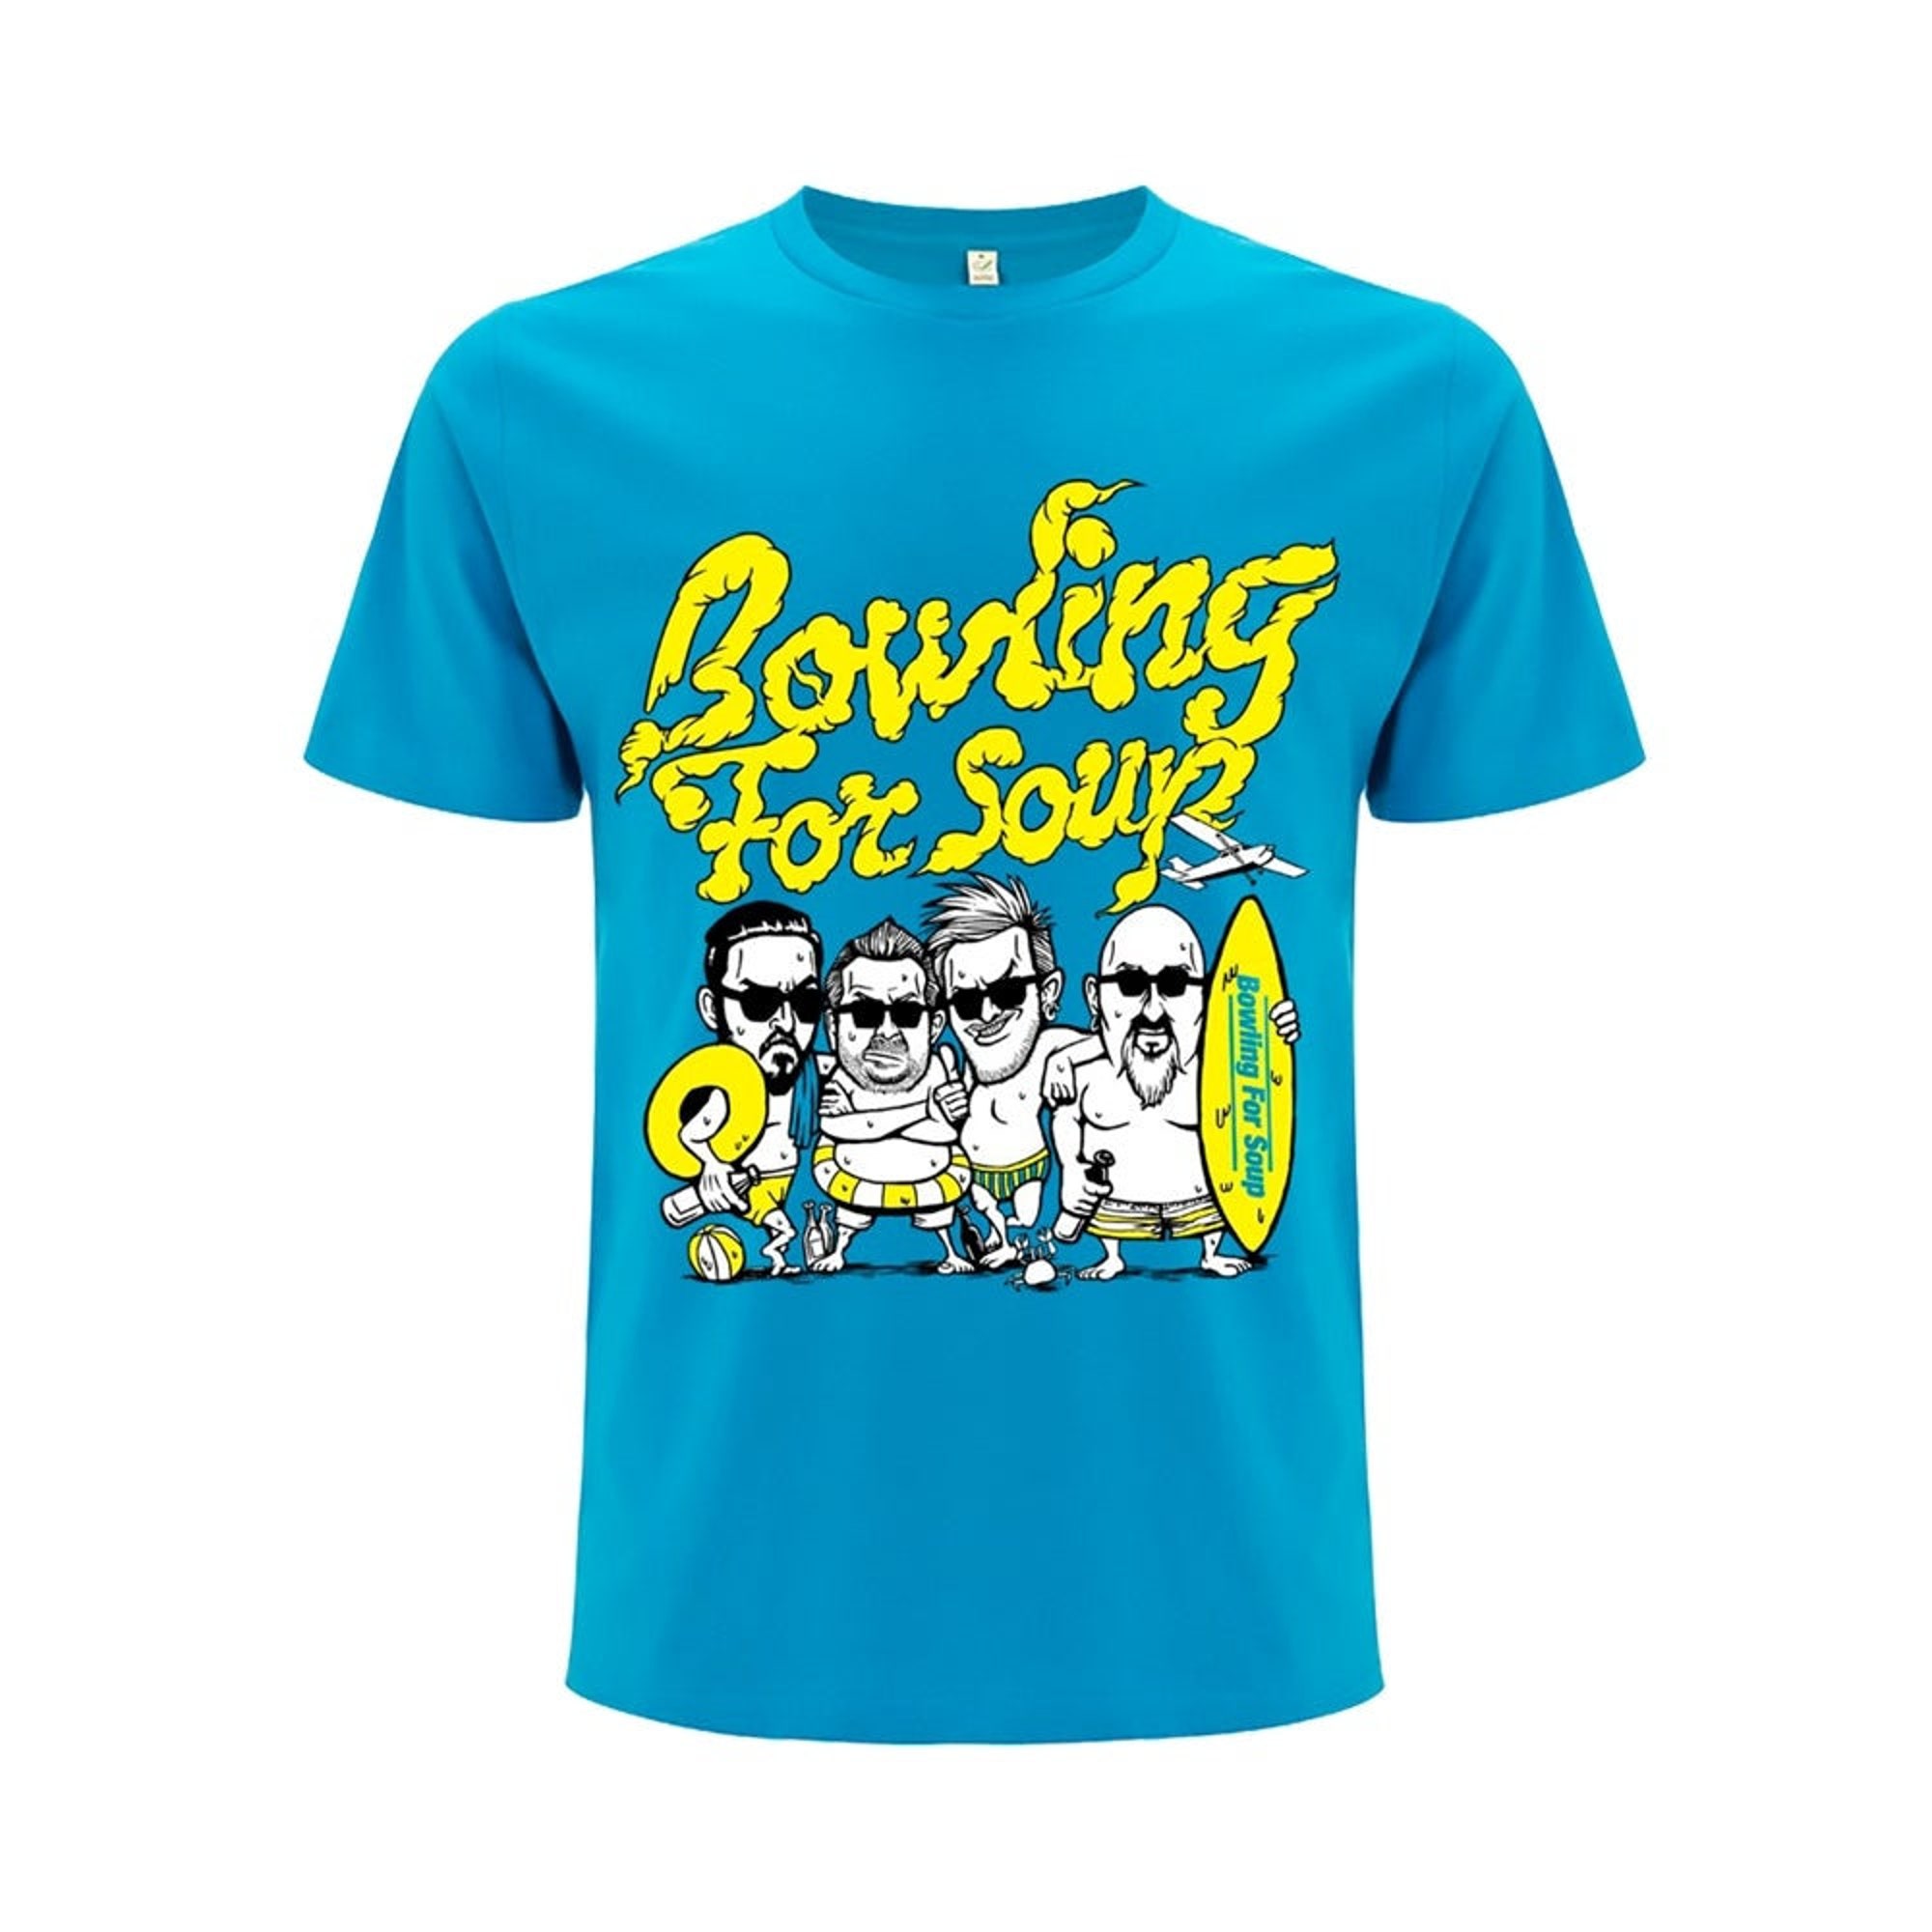 Bowling For Soup Unisex T-shirt: Beach Boys